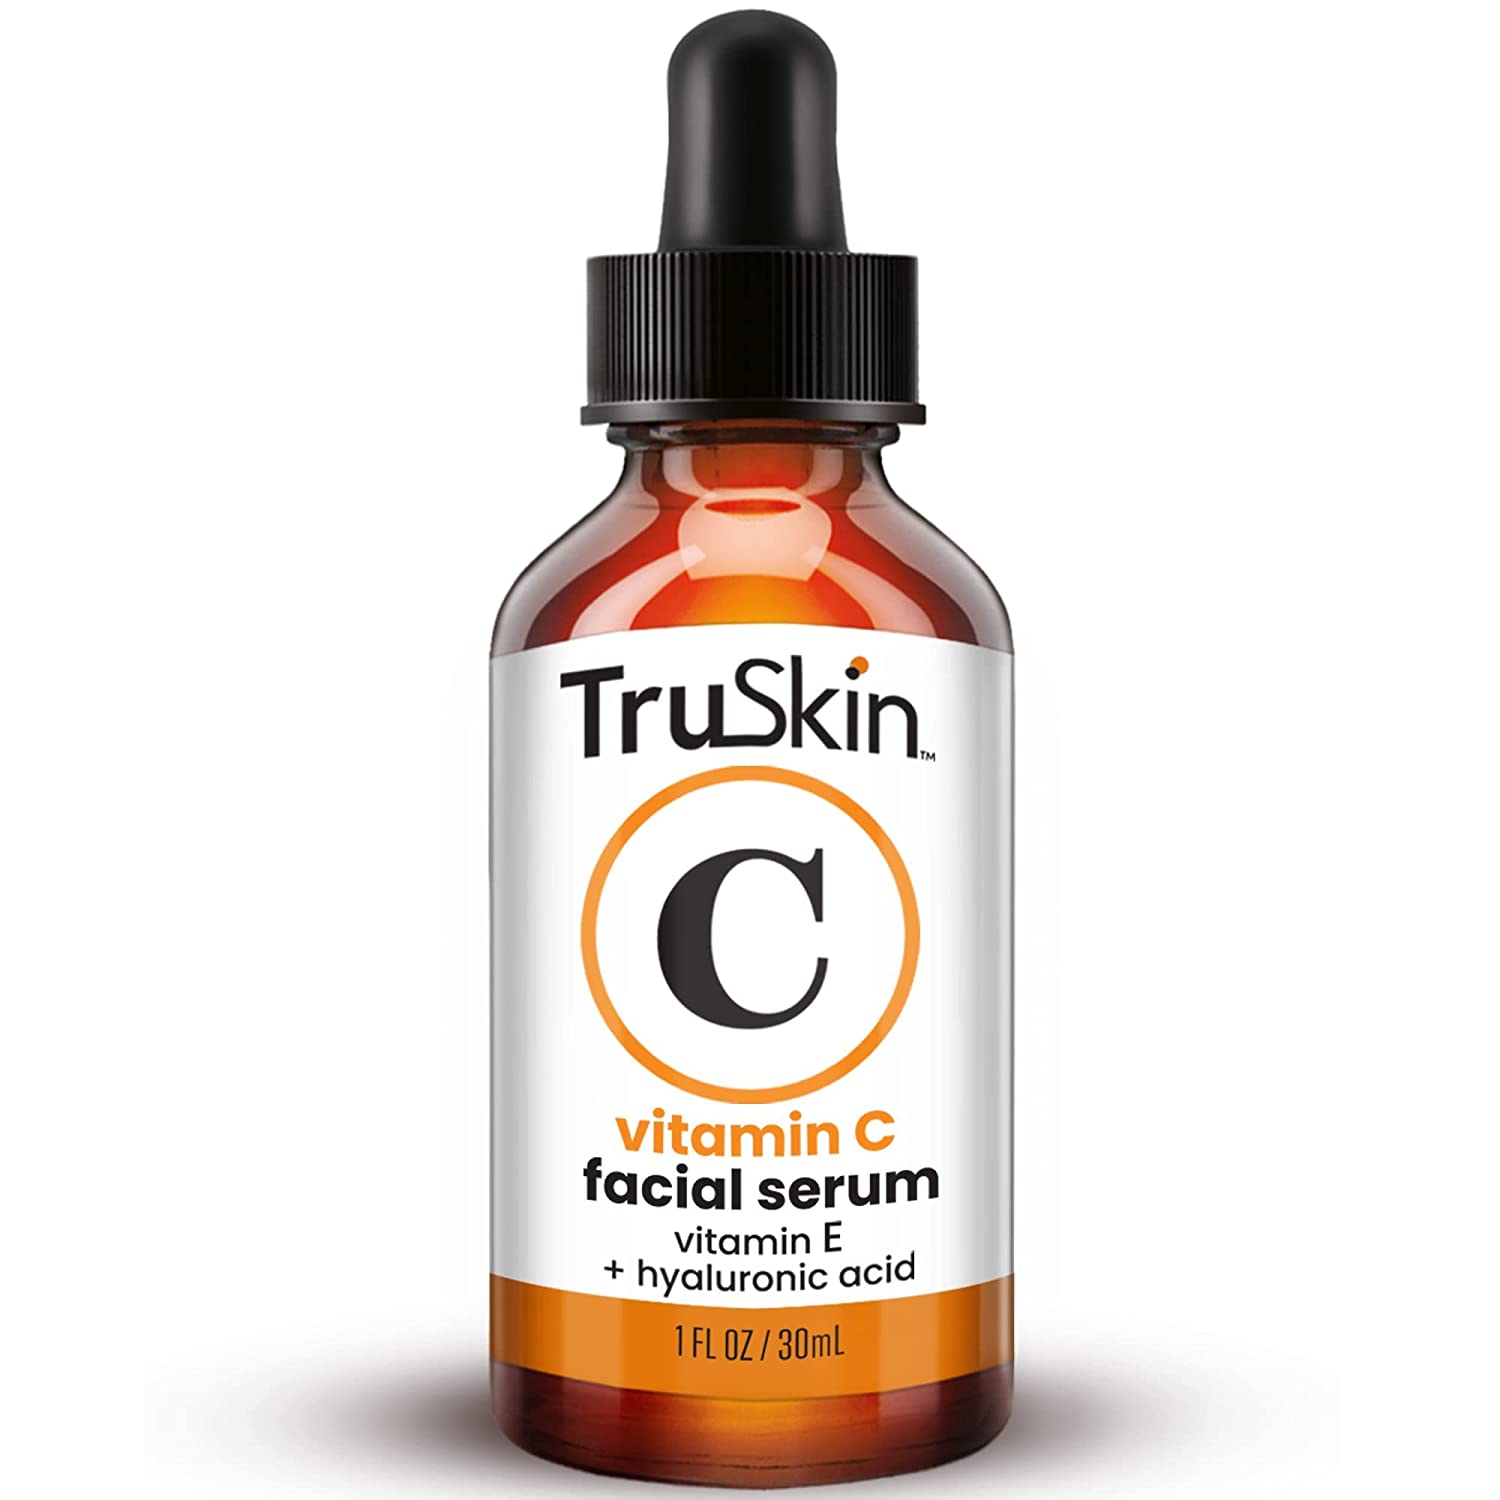 Review of TruSkin Vitamin C Serum with Hyaluronic Acid, Vitamin E, Organic Aloe Vera and Jojoba Oil